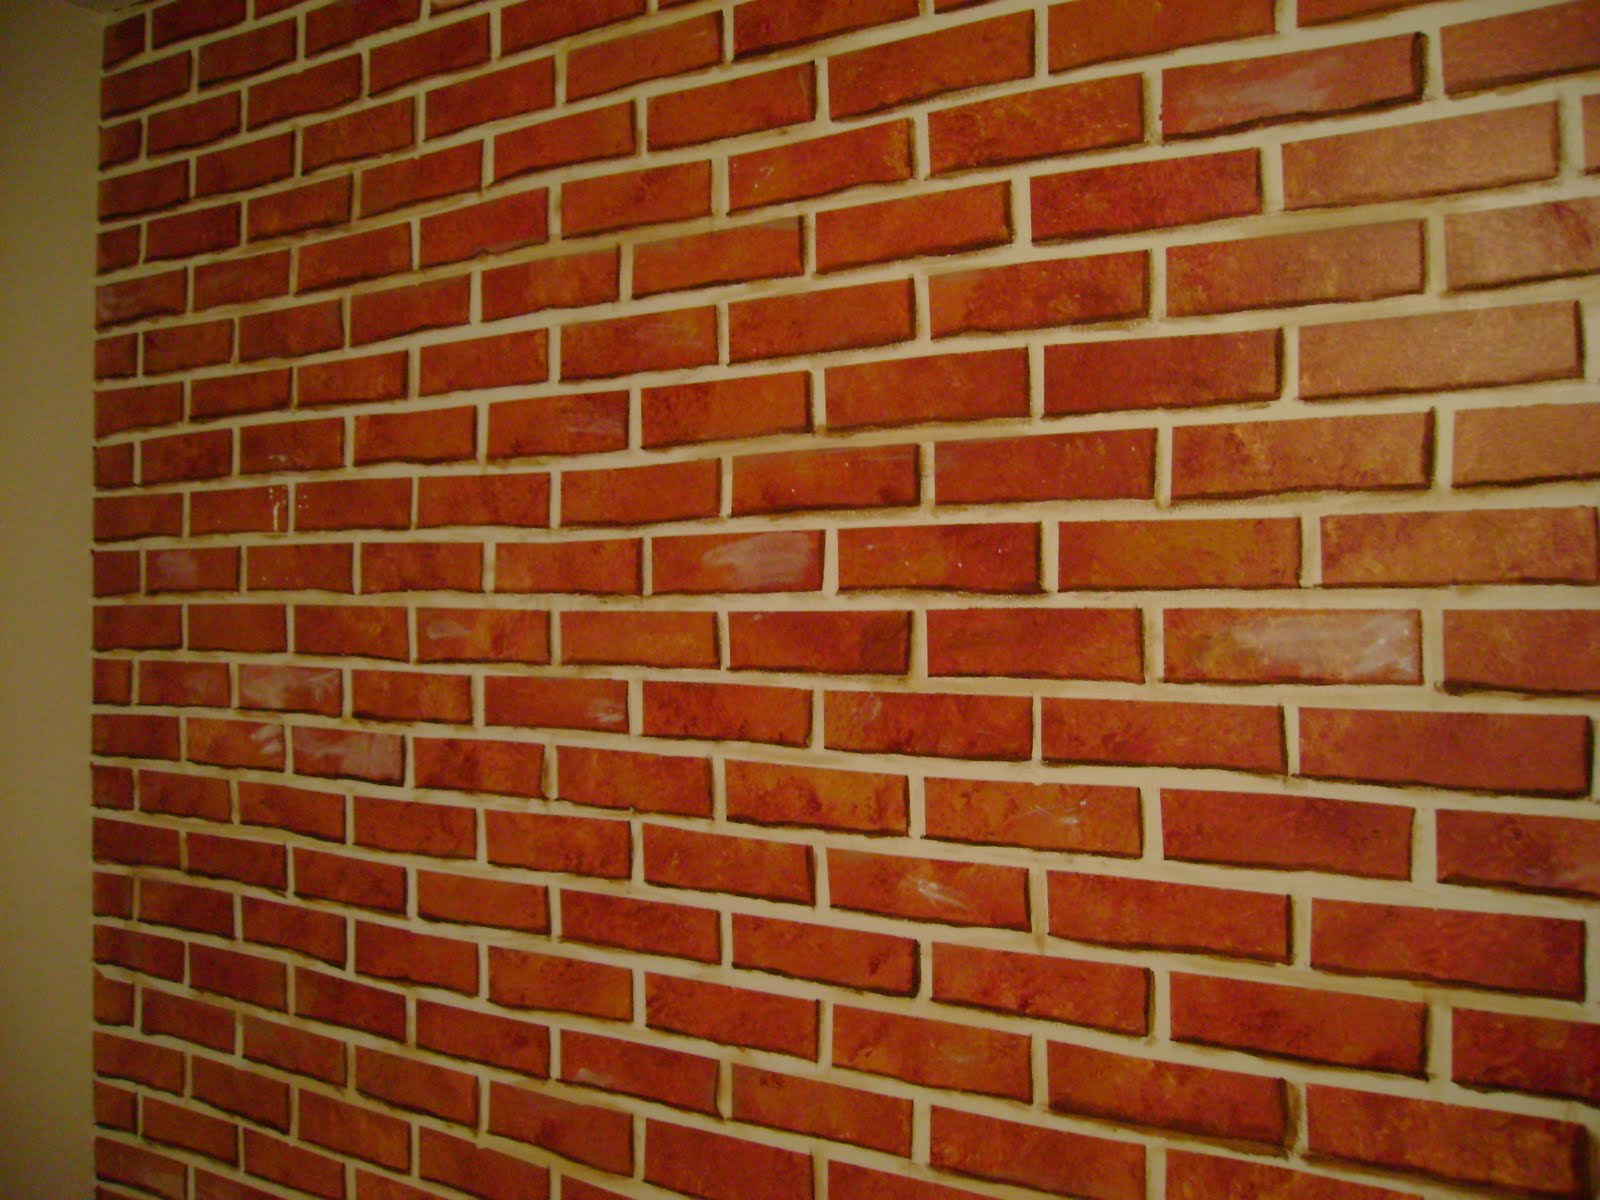  wwwhigh definition wallpapercomphotowallpaper faux brick3html